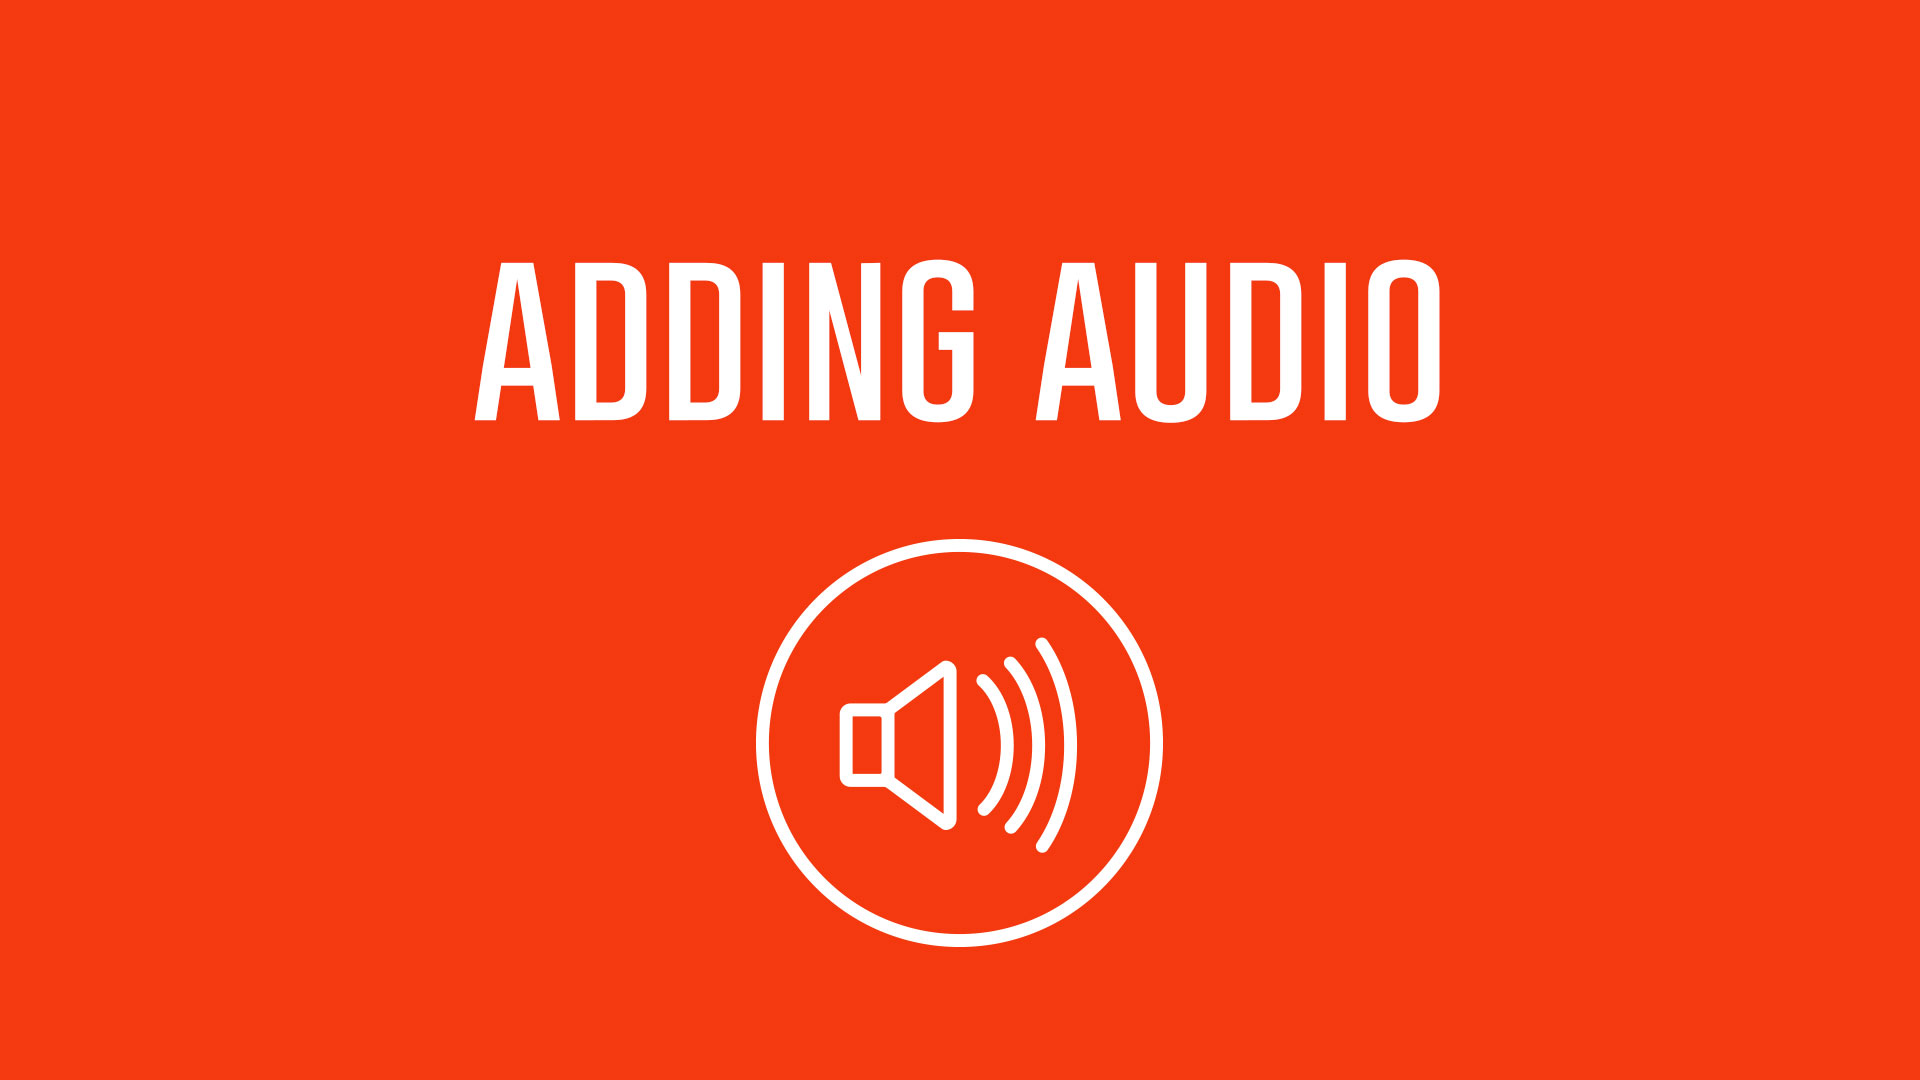 add audio to video no watermark